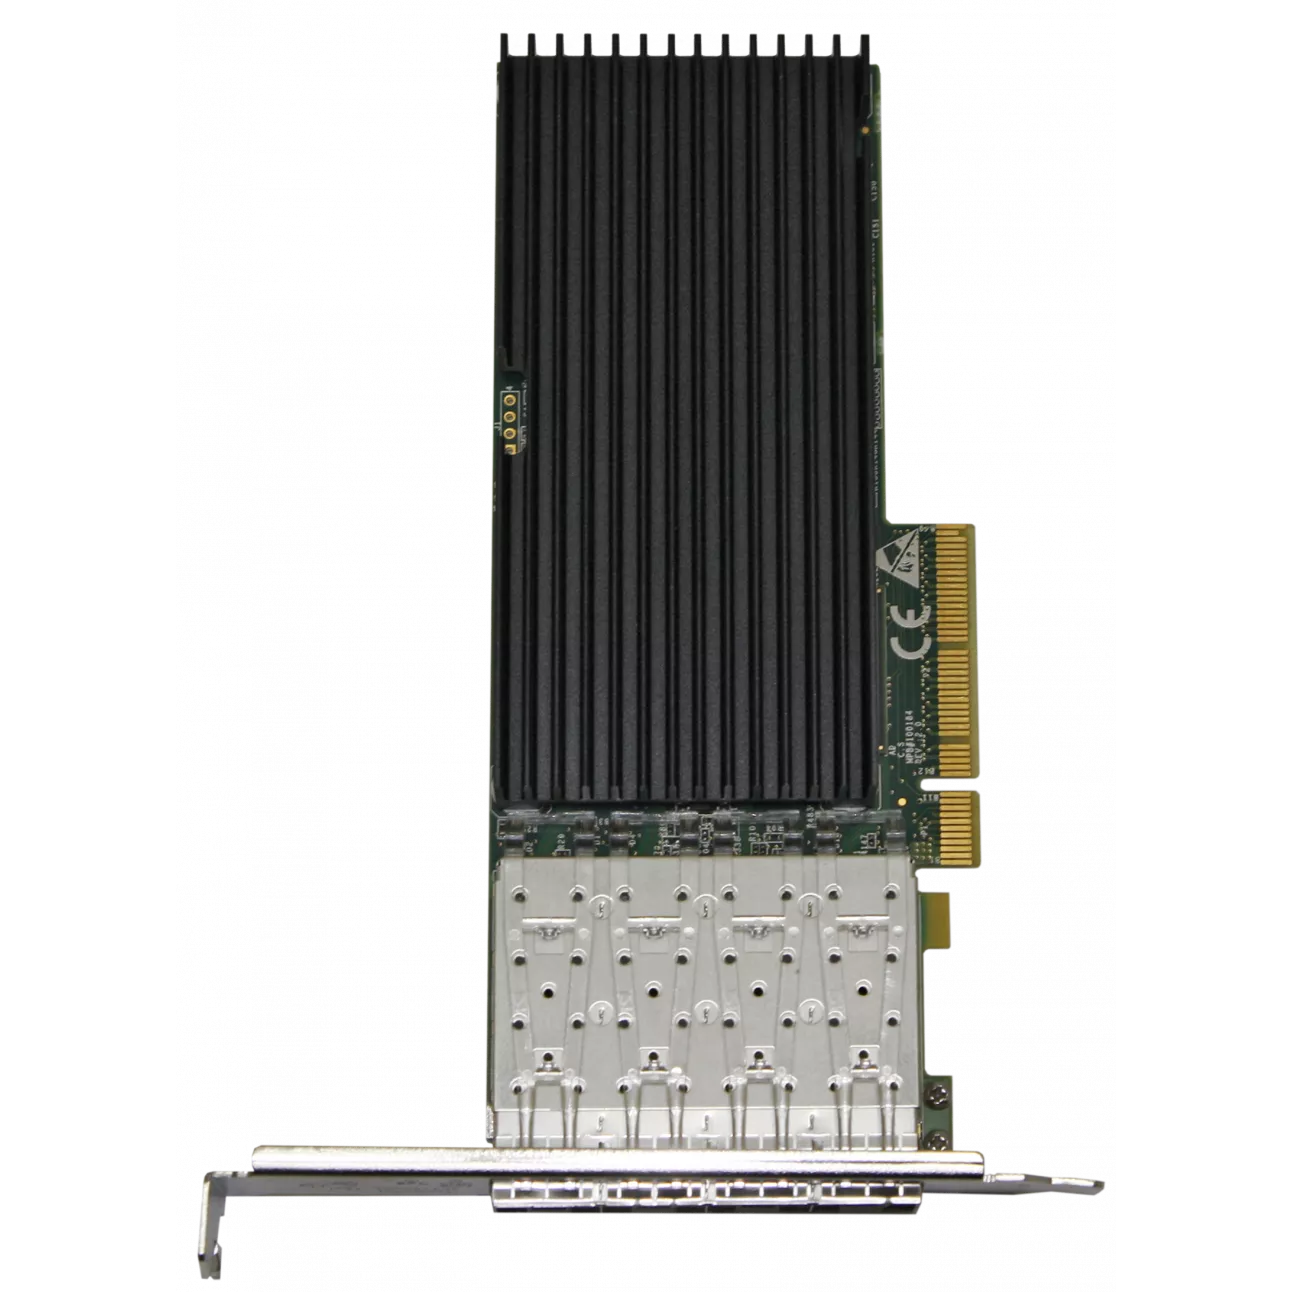 Сетевая карта 4 порта 1000Base-X/10GBase-X (SFP+, Intel 82599ES), Silicom PE310G4SPi9LA-XR 